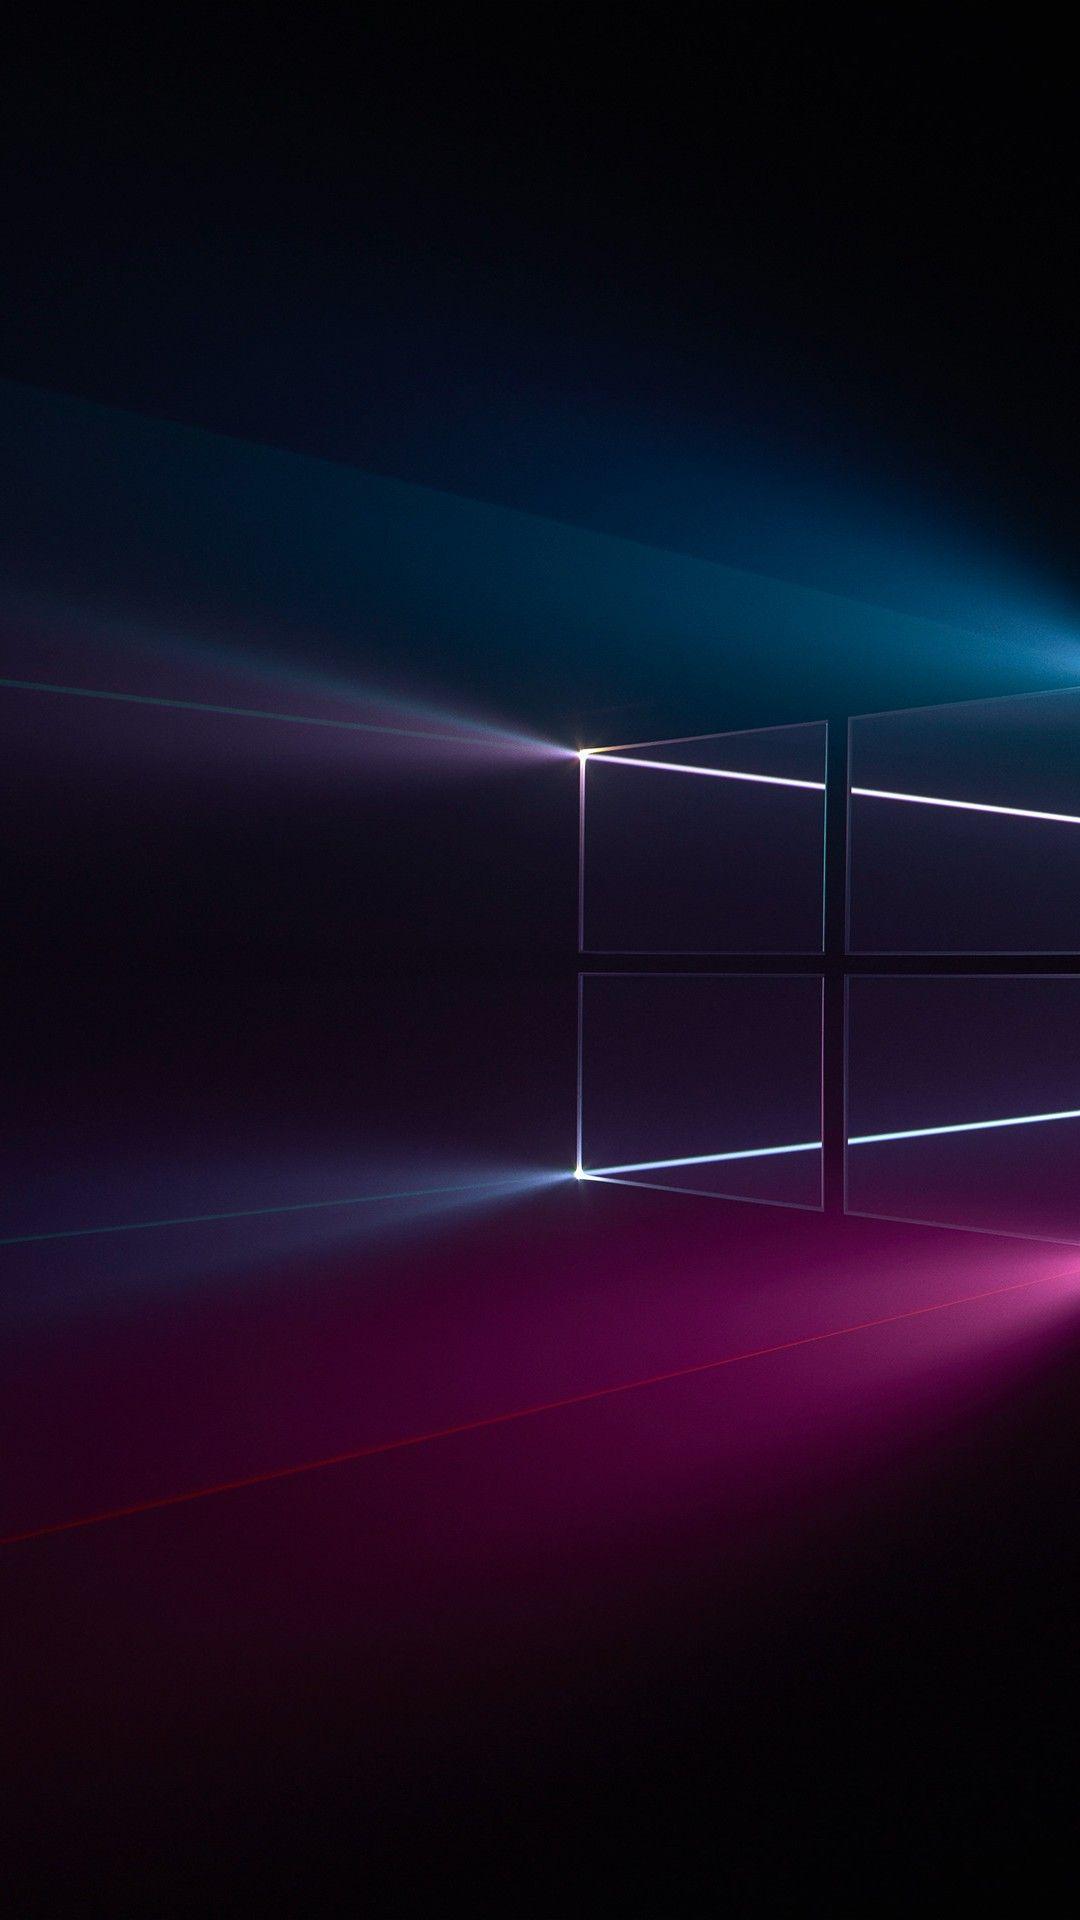 Pink and Black Windows Logo - Wallpaper Windows 10, Windows logo, Blue, Pink, Dark, HD, Black/Dark ...